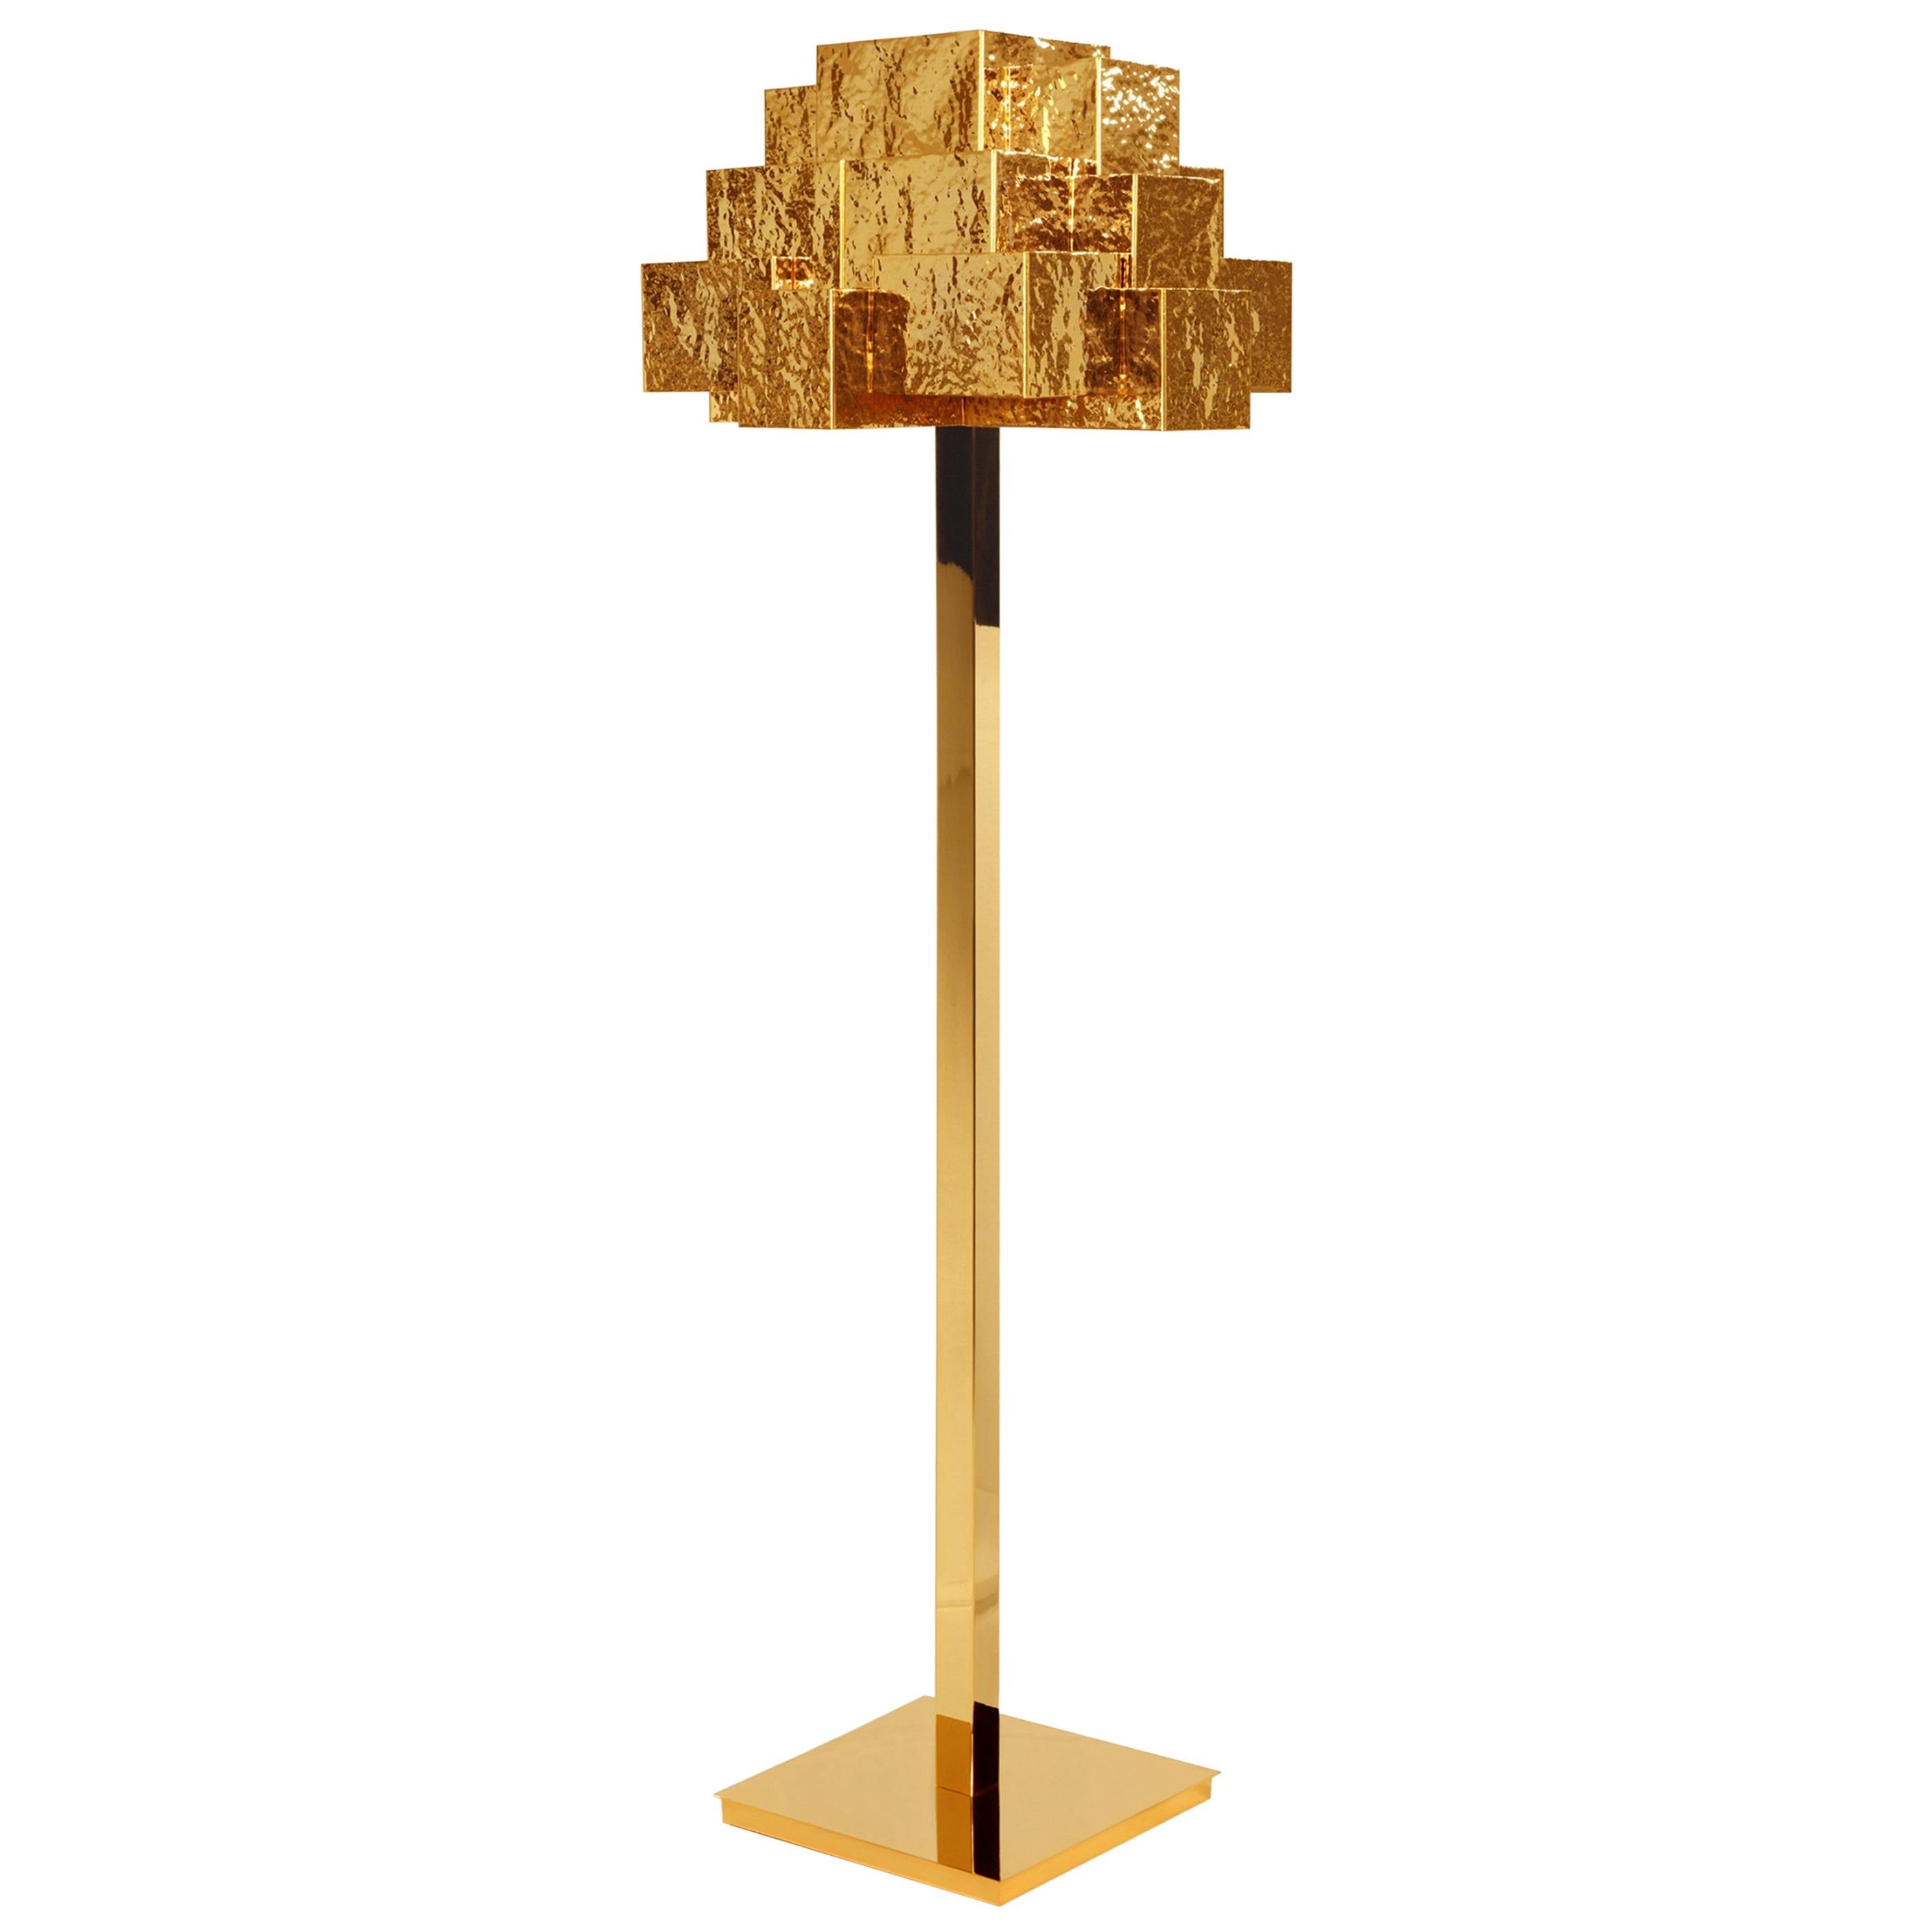 Inspiring Trees Floor Lamp, Golden Brass, InsidherLand by Joana Santos Barbosa